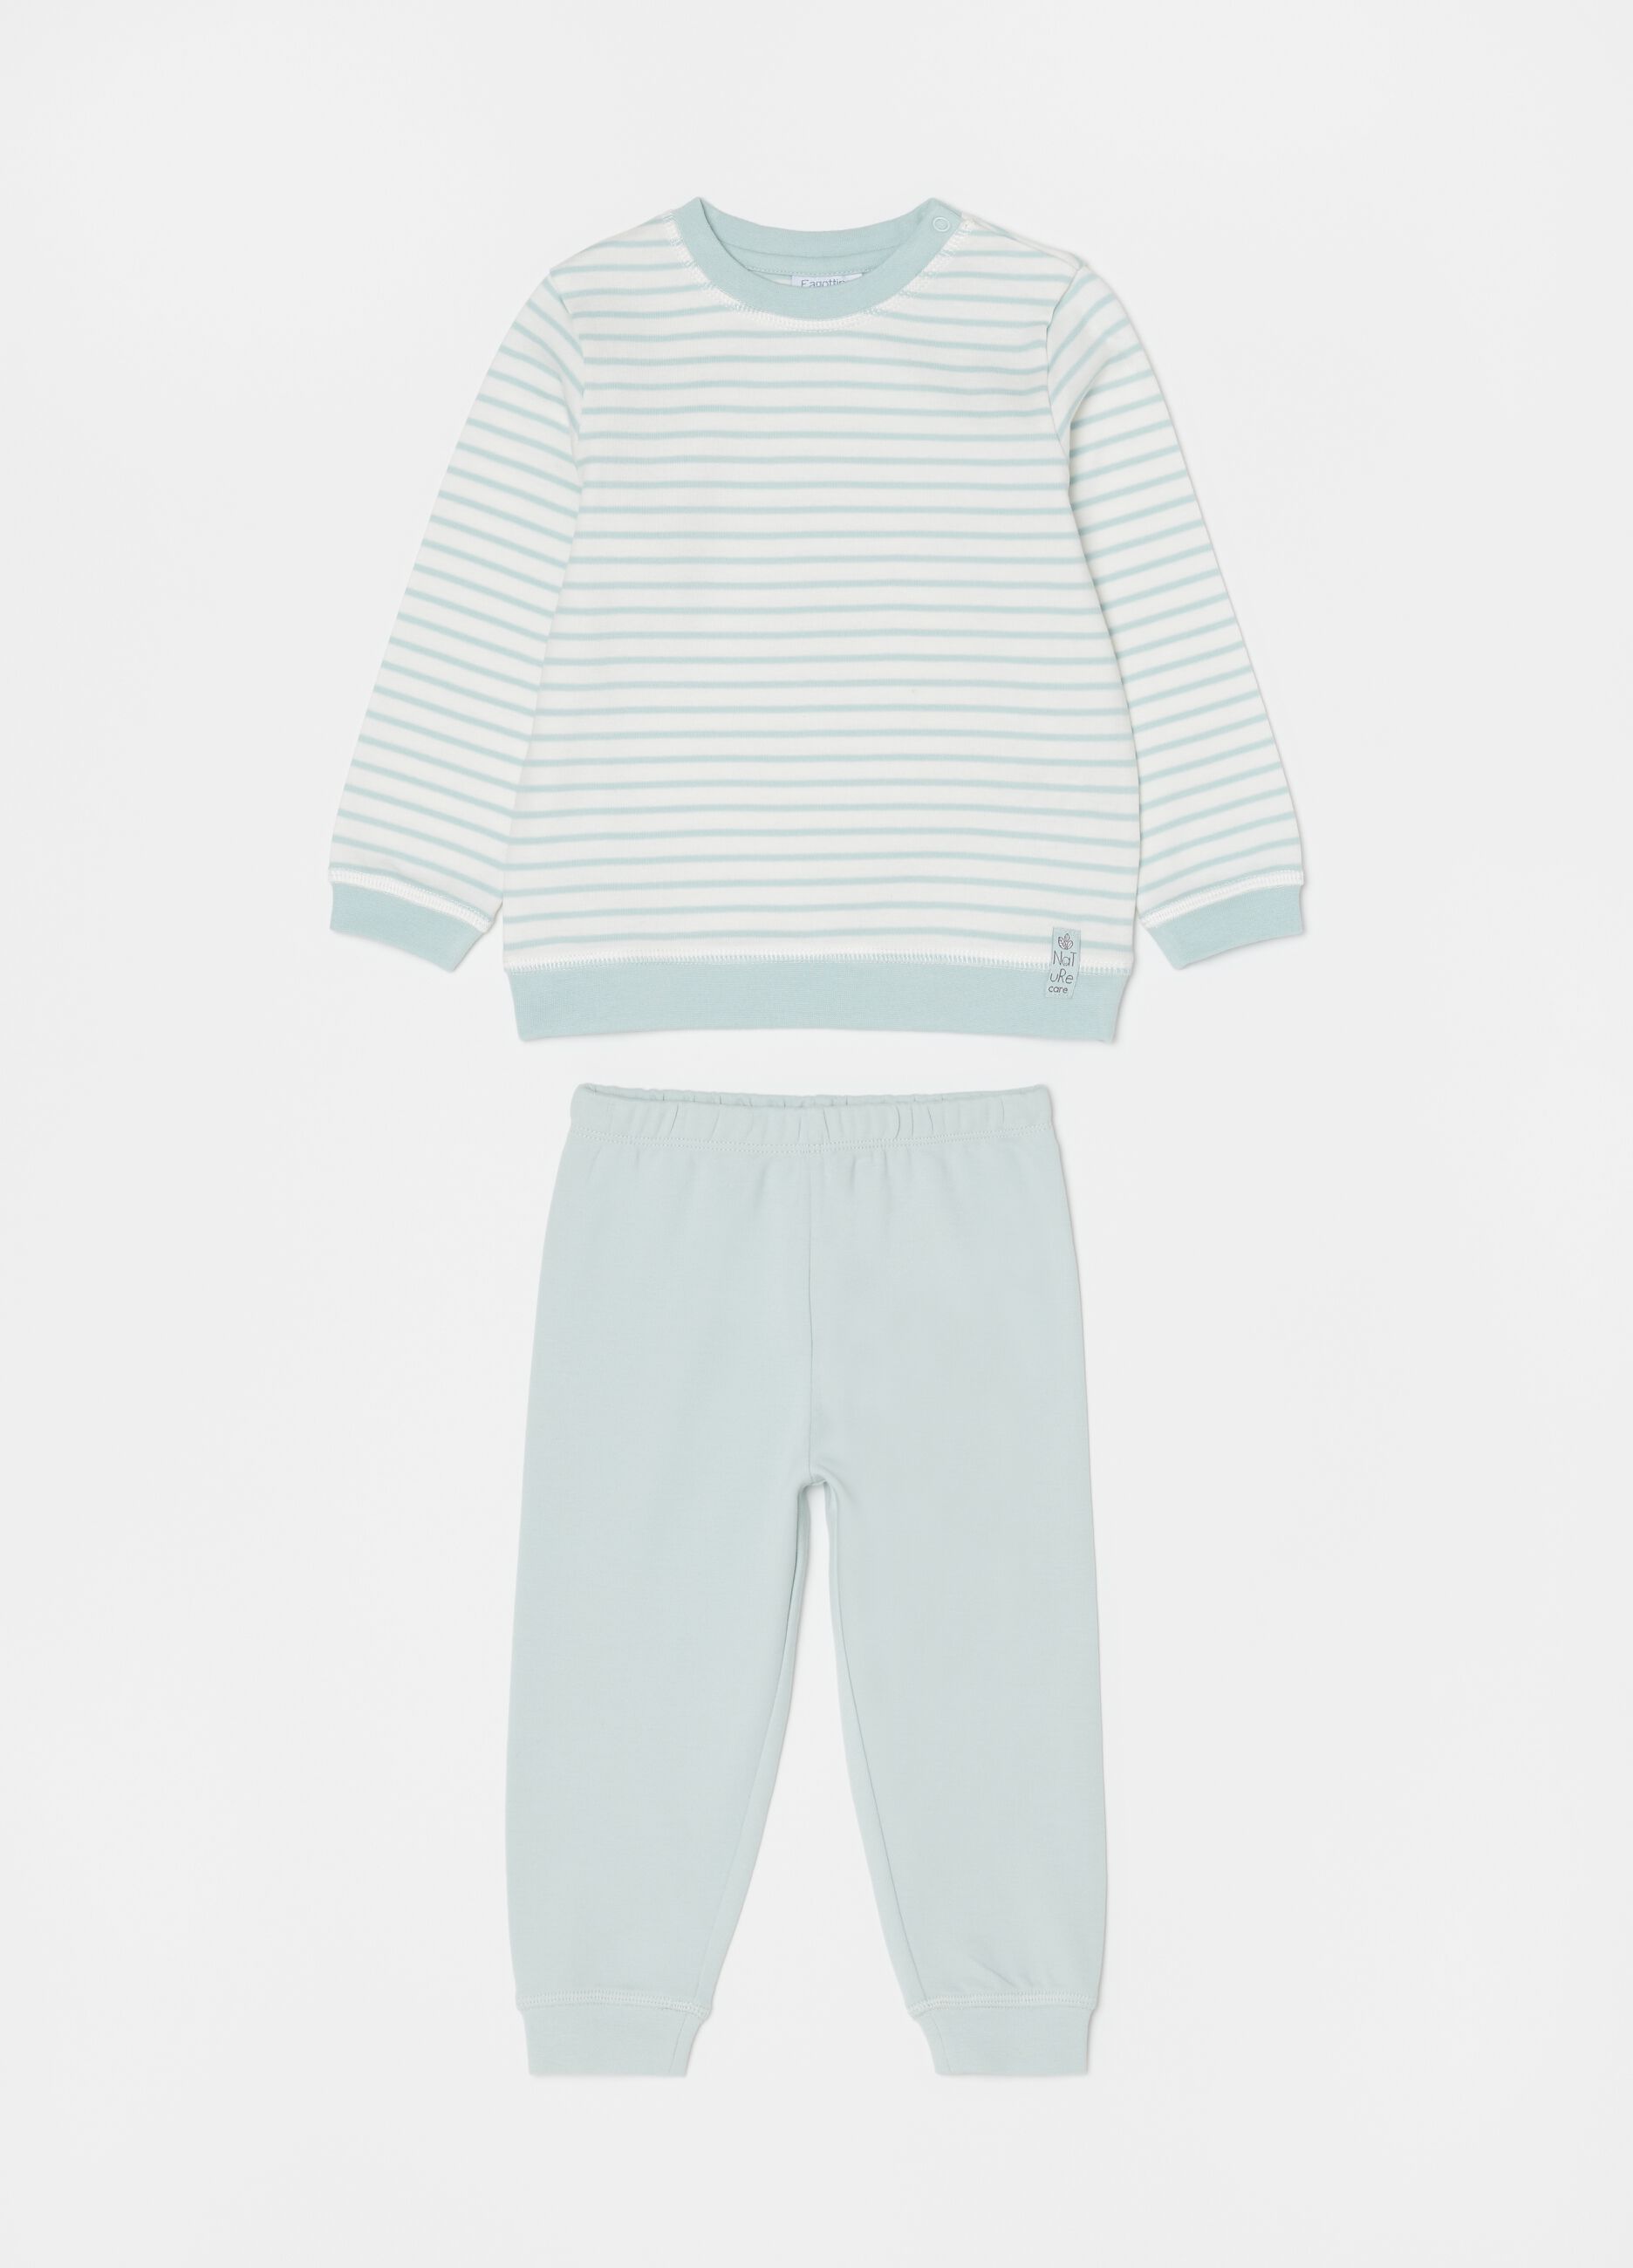 100% cotton pyjamas with stripes and round neck